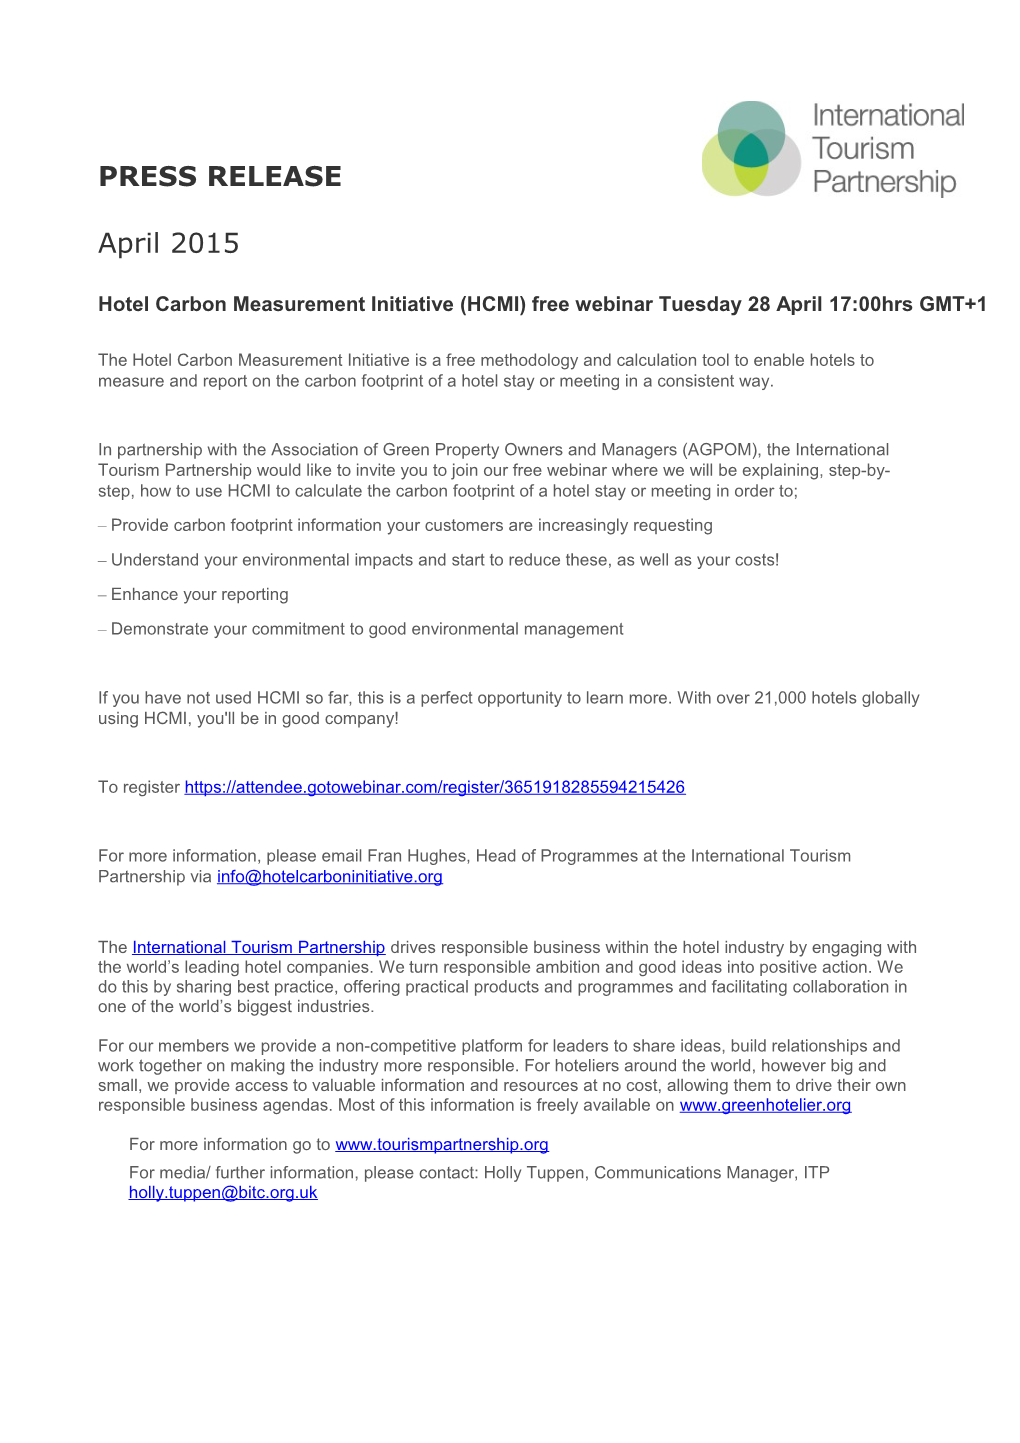 Hotel Carbon Measurement Initiative (HCMI) Free Webinar Tuesday 28 April 17:00Hrs GMT+1